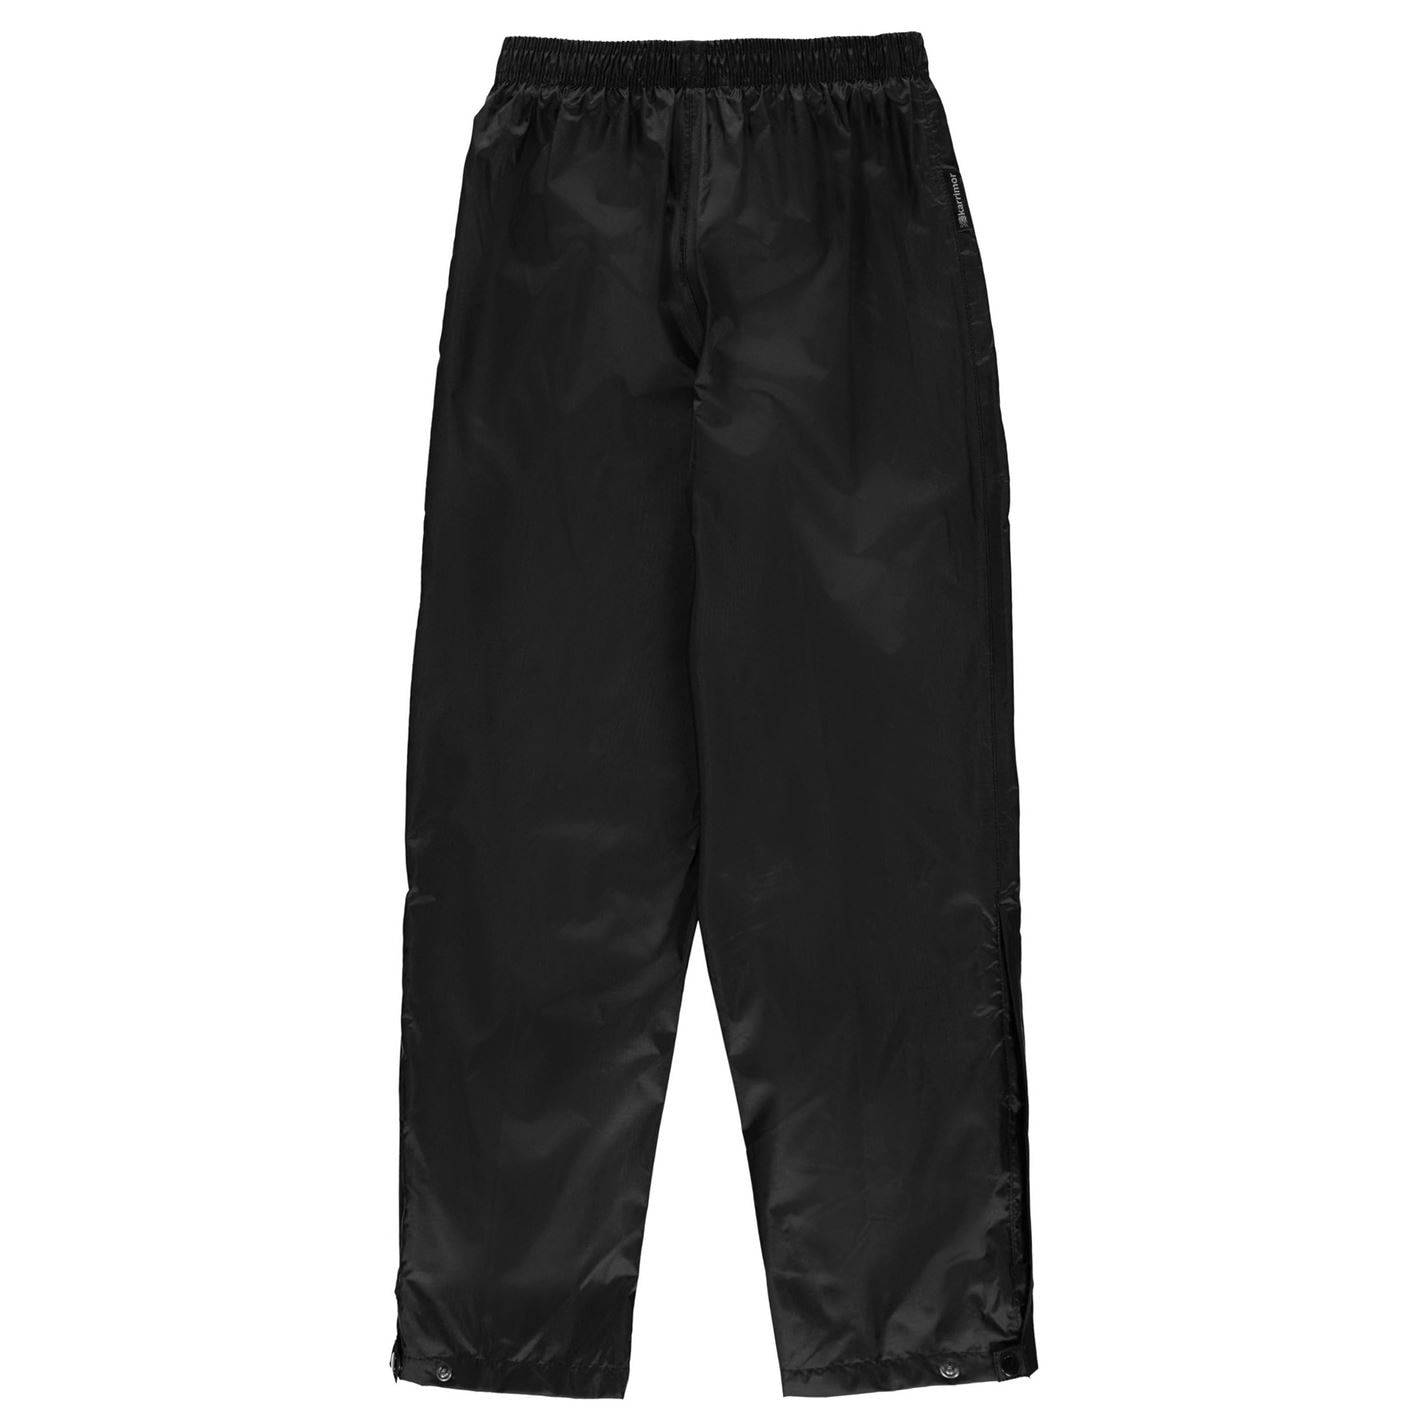 Pantaloni Karrimor Sierra pentru copii negru